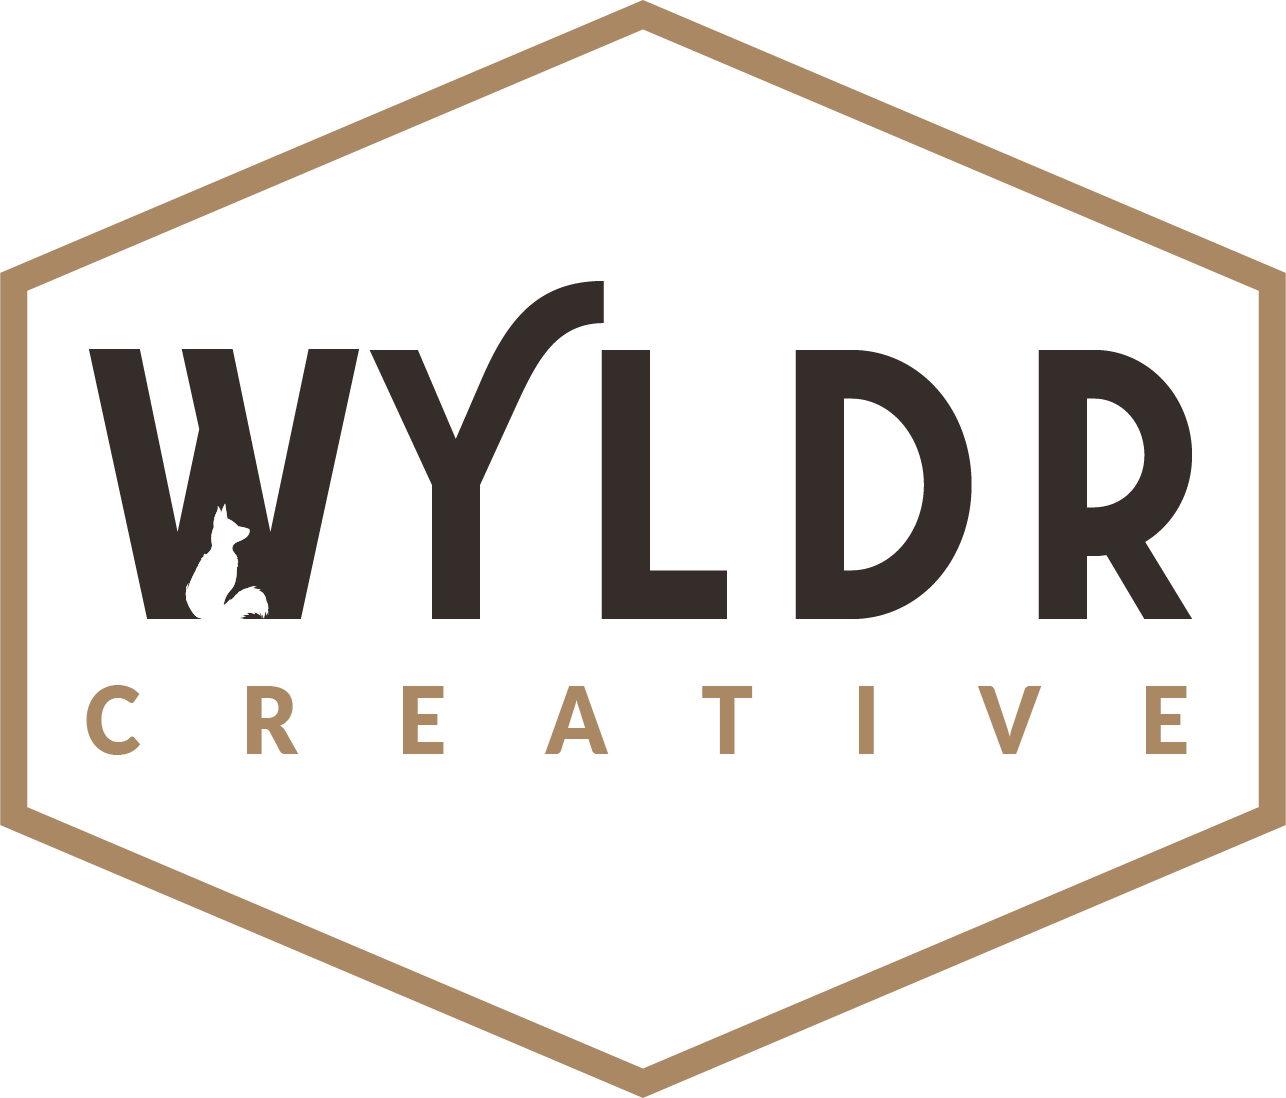 WYLDR Creative